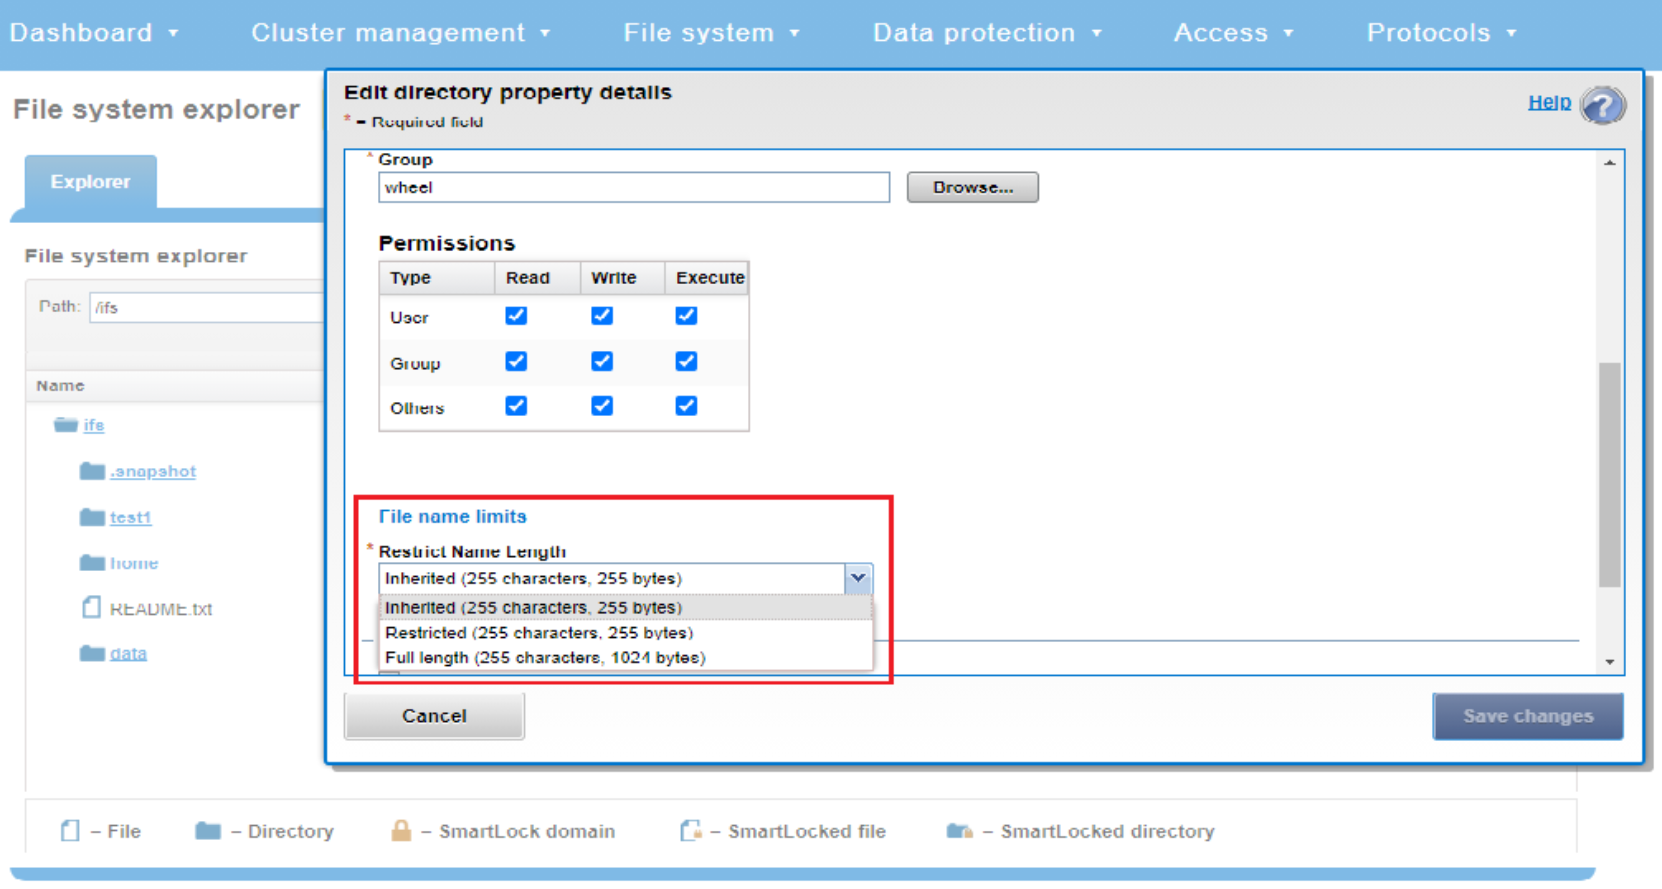 Screenshot showing file system explorer filename limits configuration.